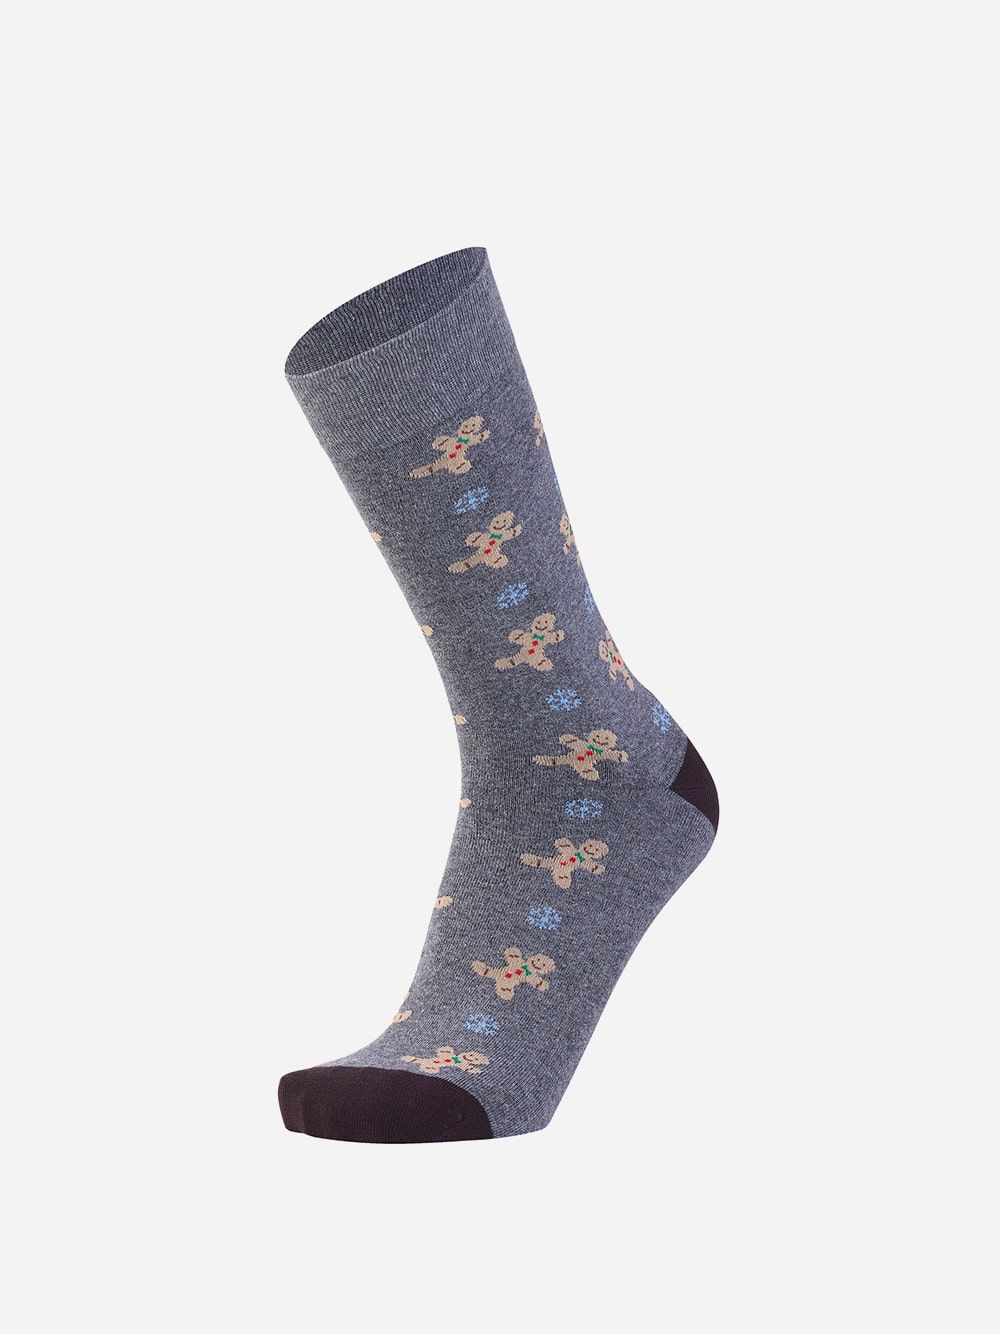 Grey Socks Christmas Edition | Westmister